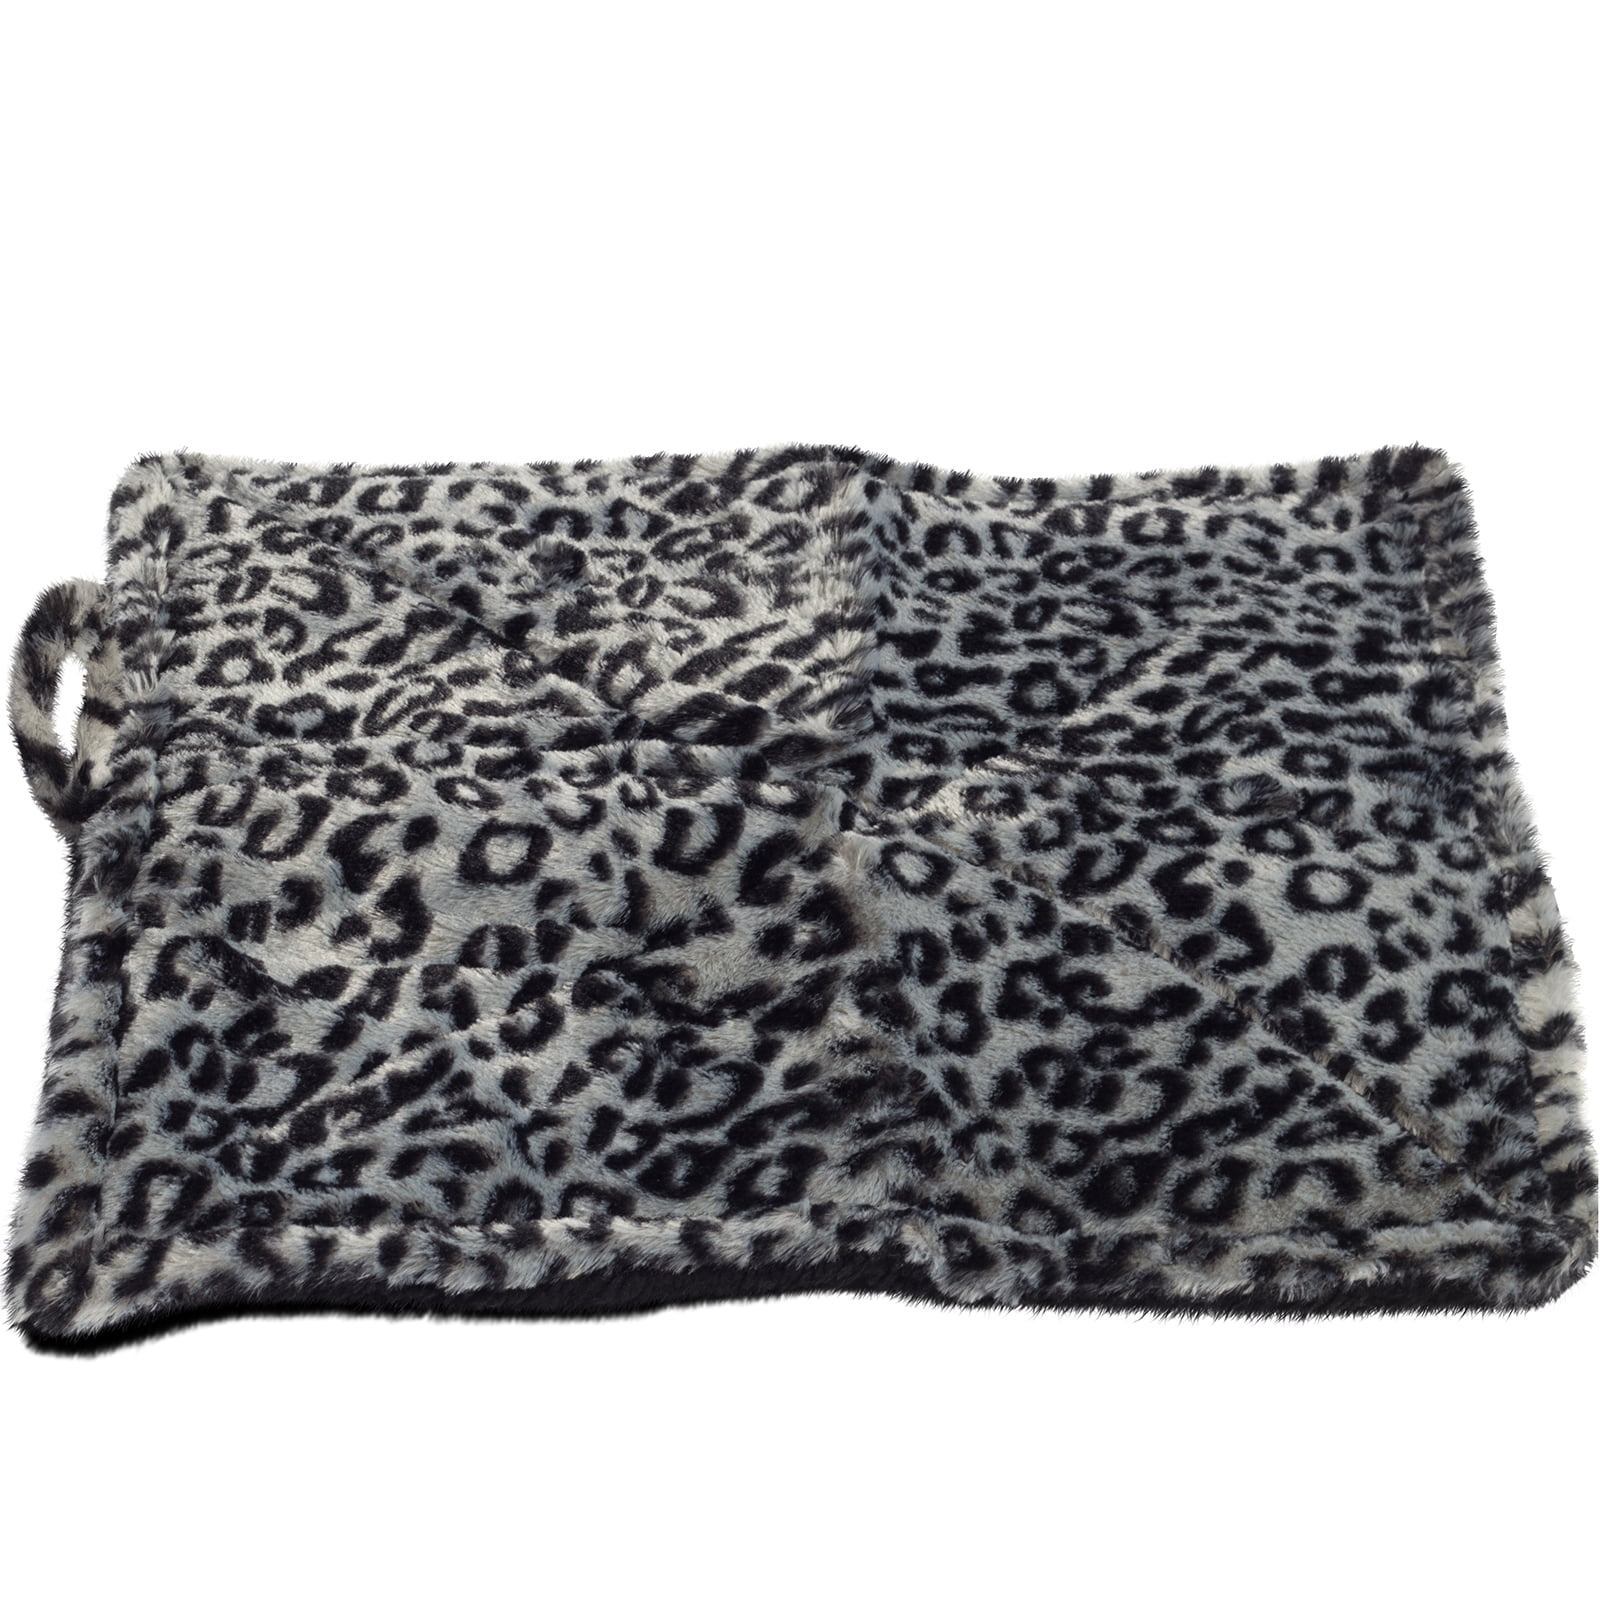 Paws & Pals Self Warming Medium Cat Pet Bed Gray Black Leopard Print (20x17.5x0.1 inches)